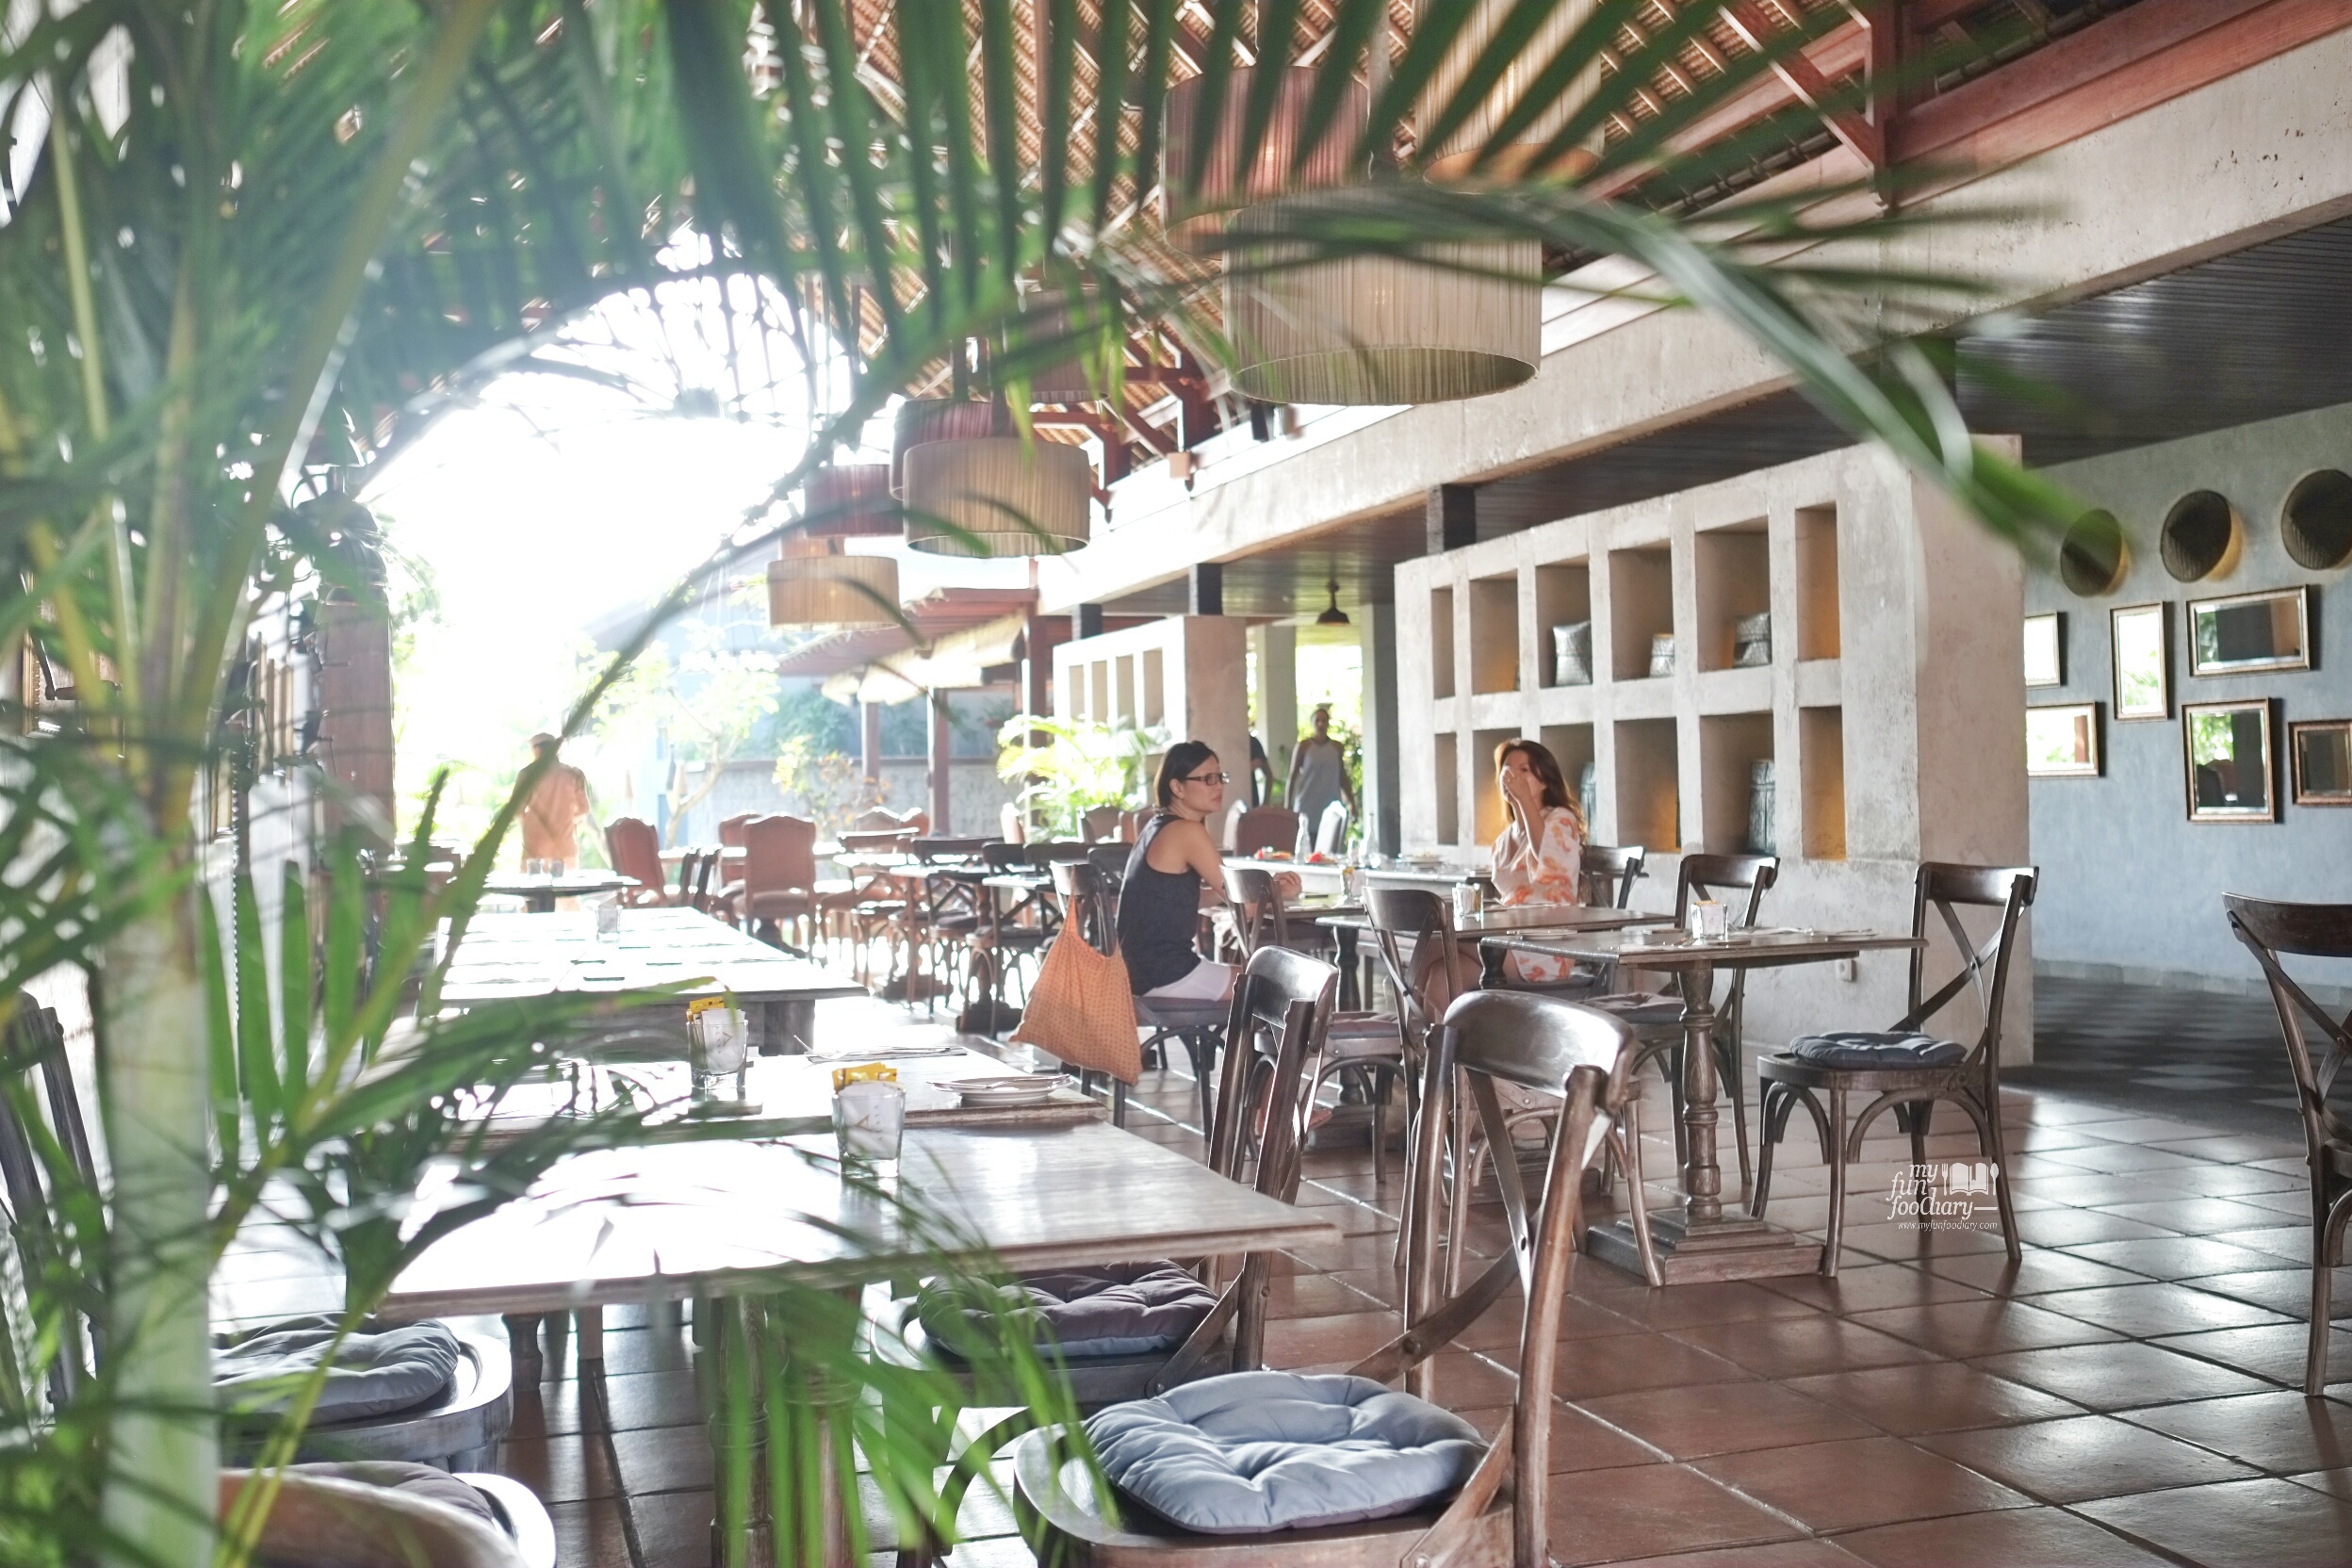 Day Time at Petani Restaurant at Alaya Resort Ubud by Myfunfoodiary